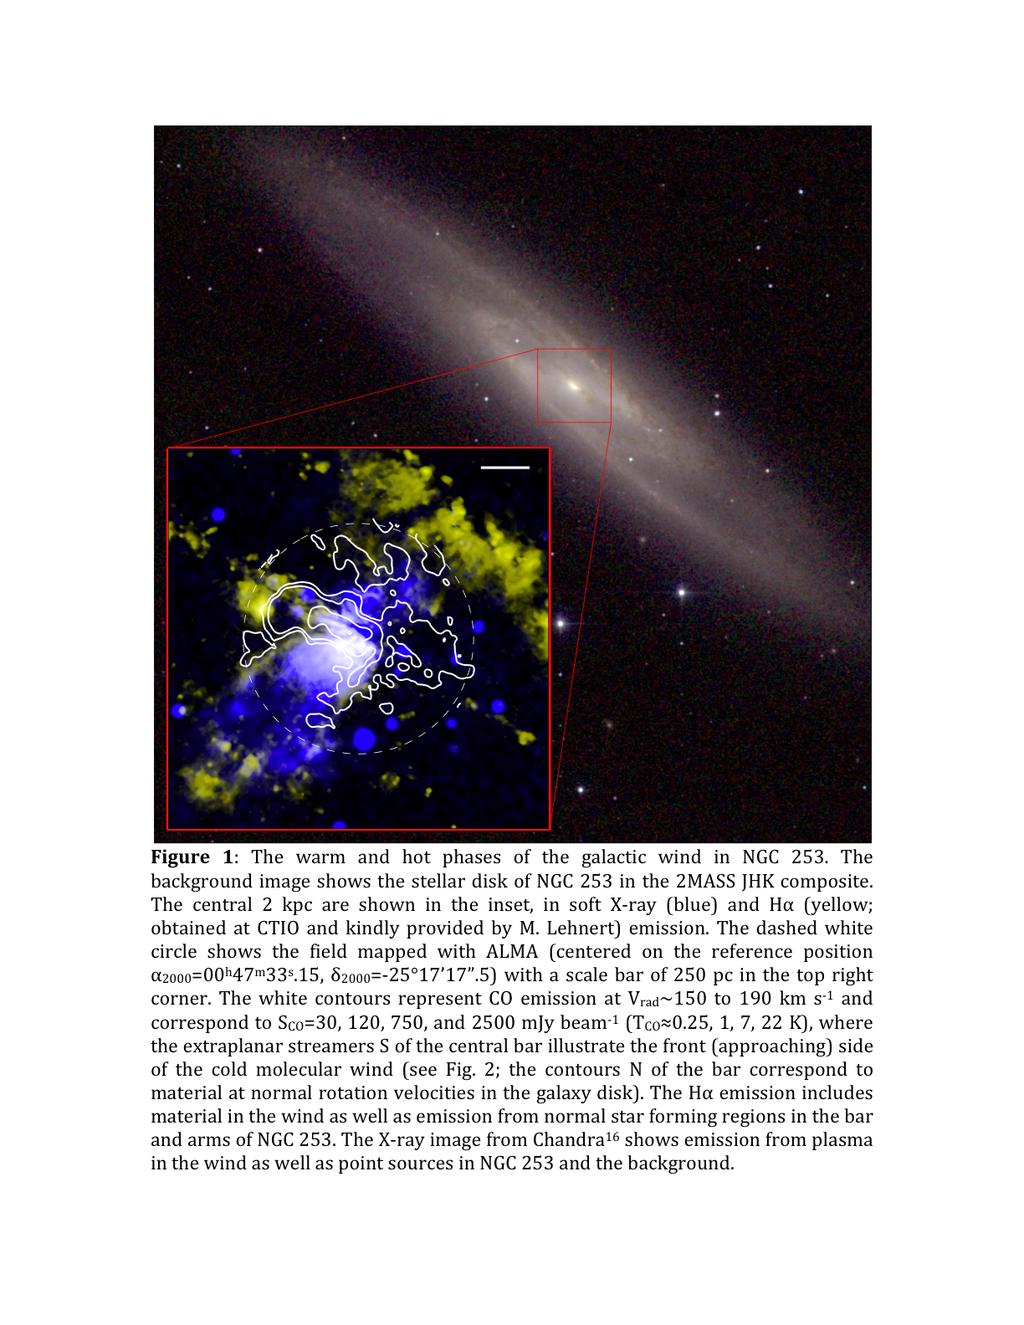 Molecular Outflow in the Starburst NGC 253 Bolatto, Warren, Leroy, Walter, SV, et al. (2013, Nature) Walter, Bolatto, Leroy, SV, et al.